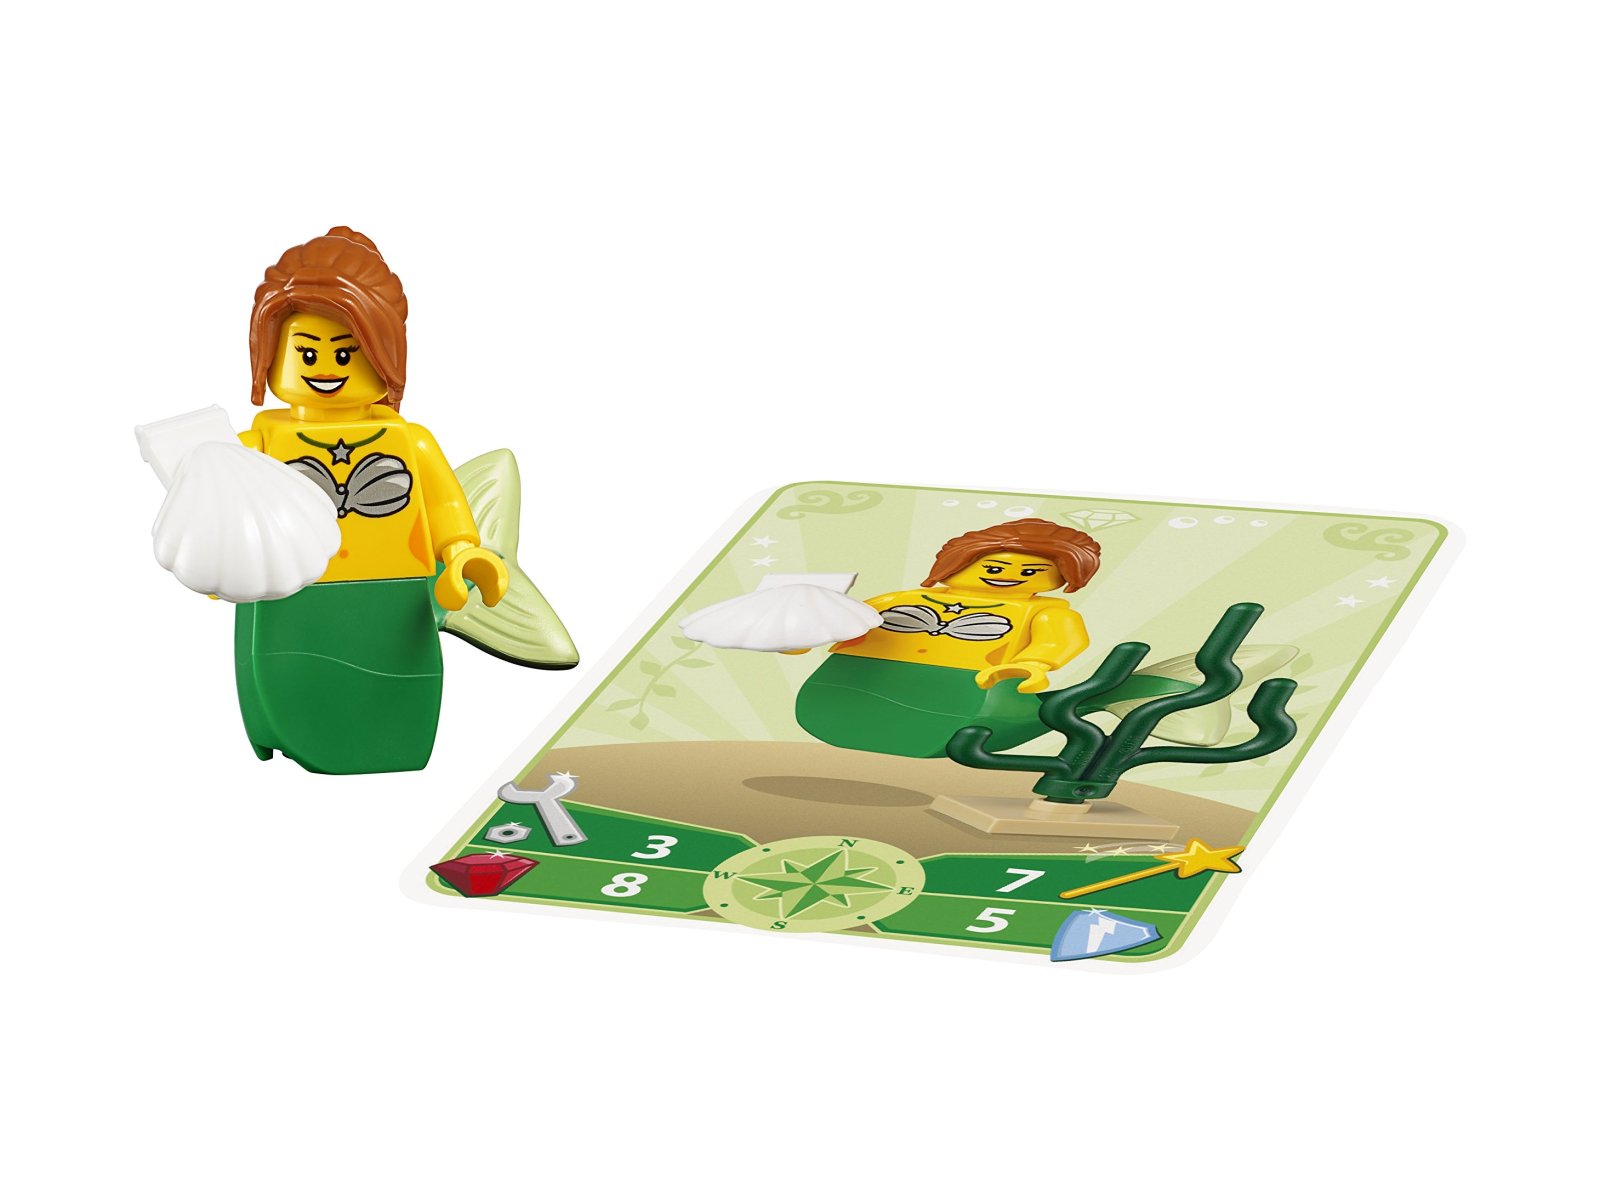 LEGO Education 45023 Fantasy Minifigure Set